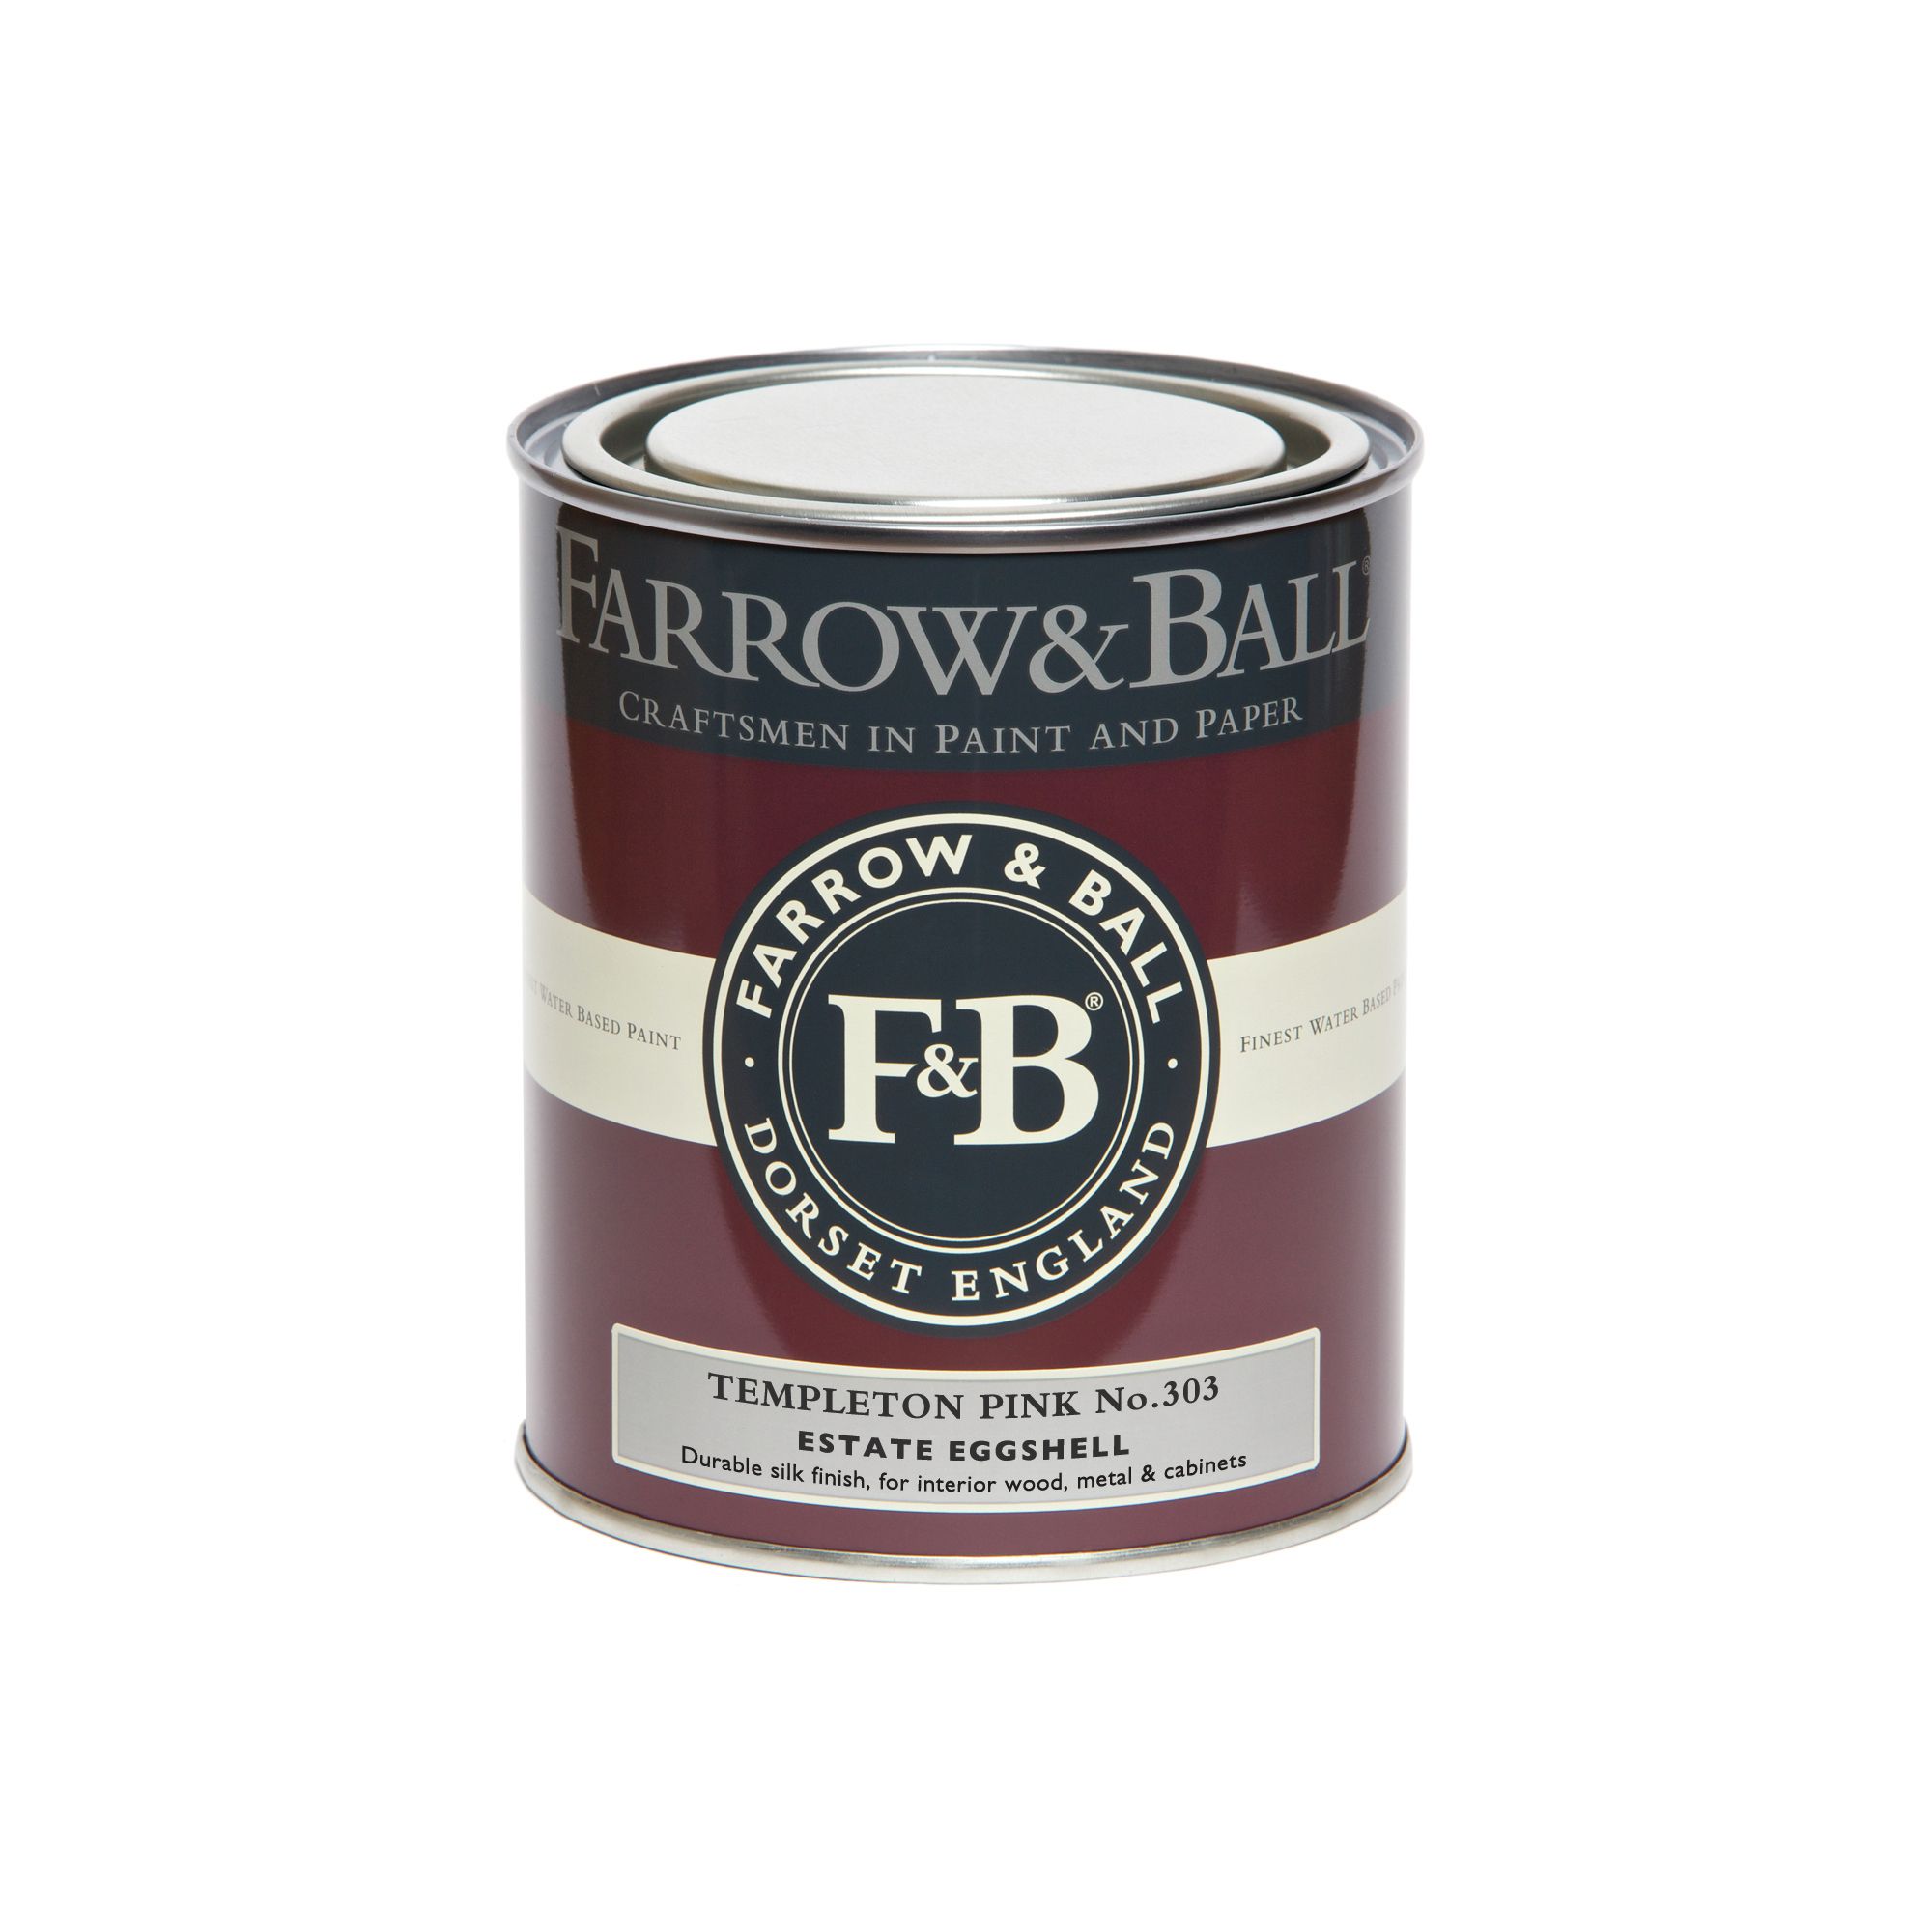 Farrow & Ball Estate Templeton Pink No.303 Eggshell Paint, 750ml